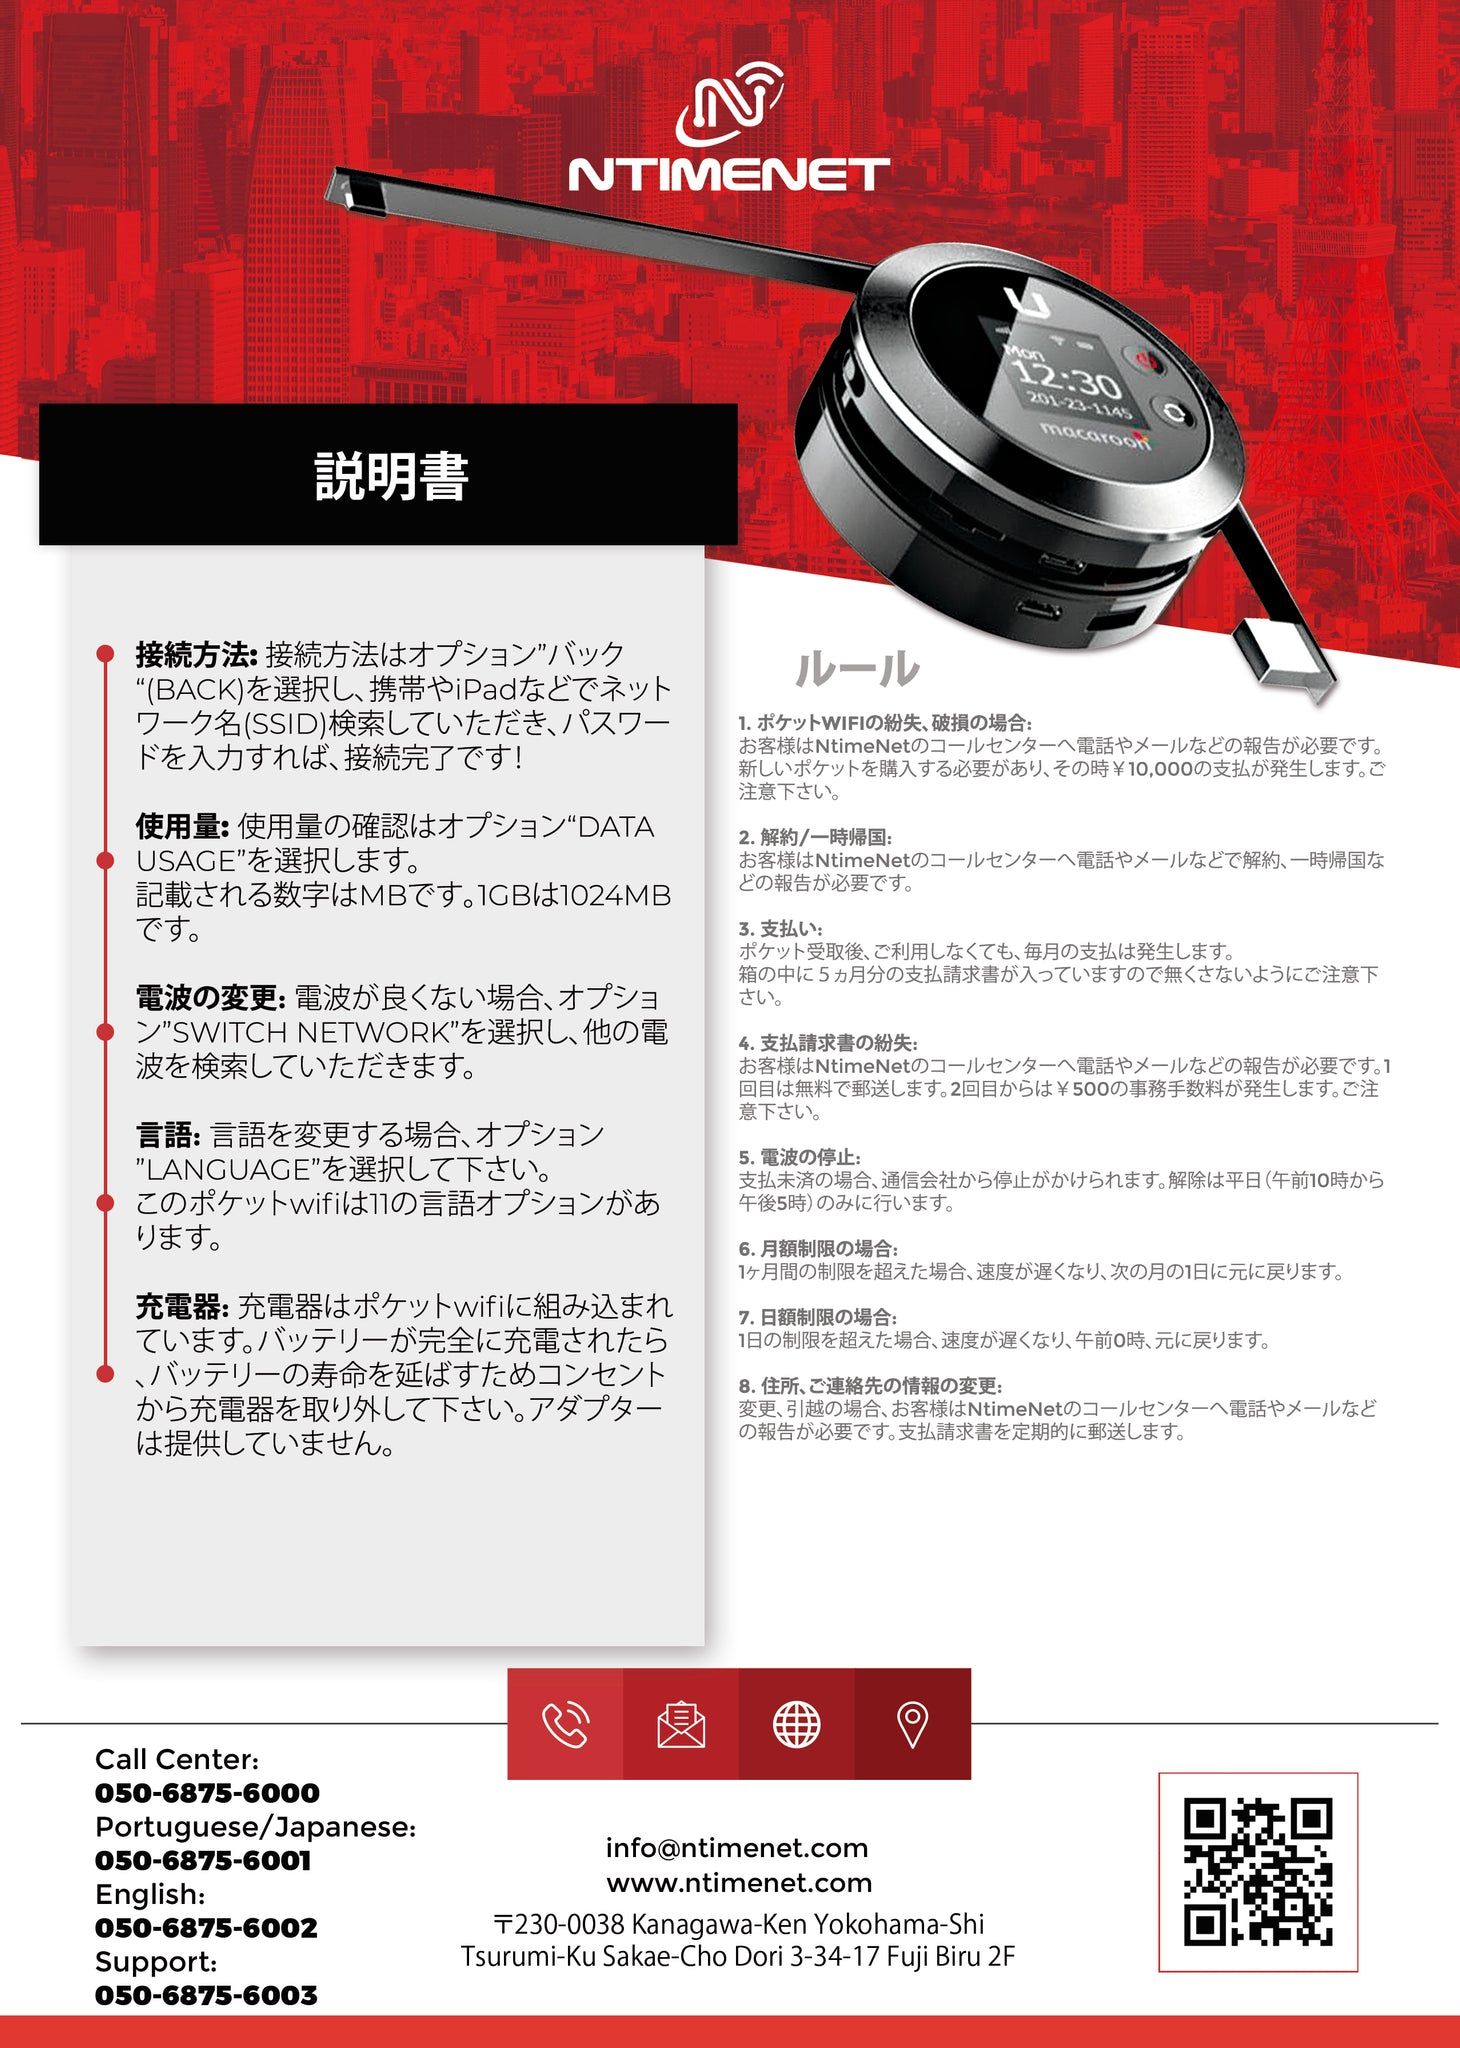 Instructions For Use Macaroon 日本語 Ntimenet